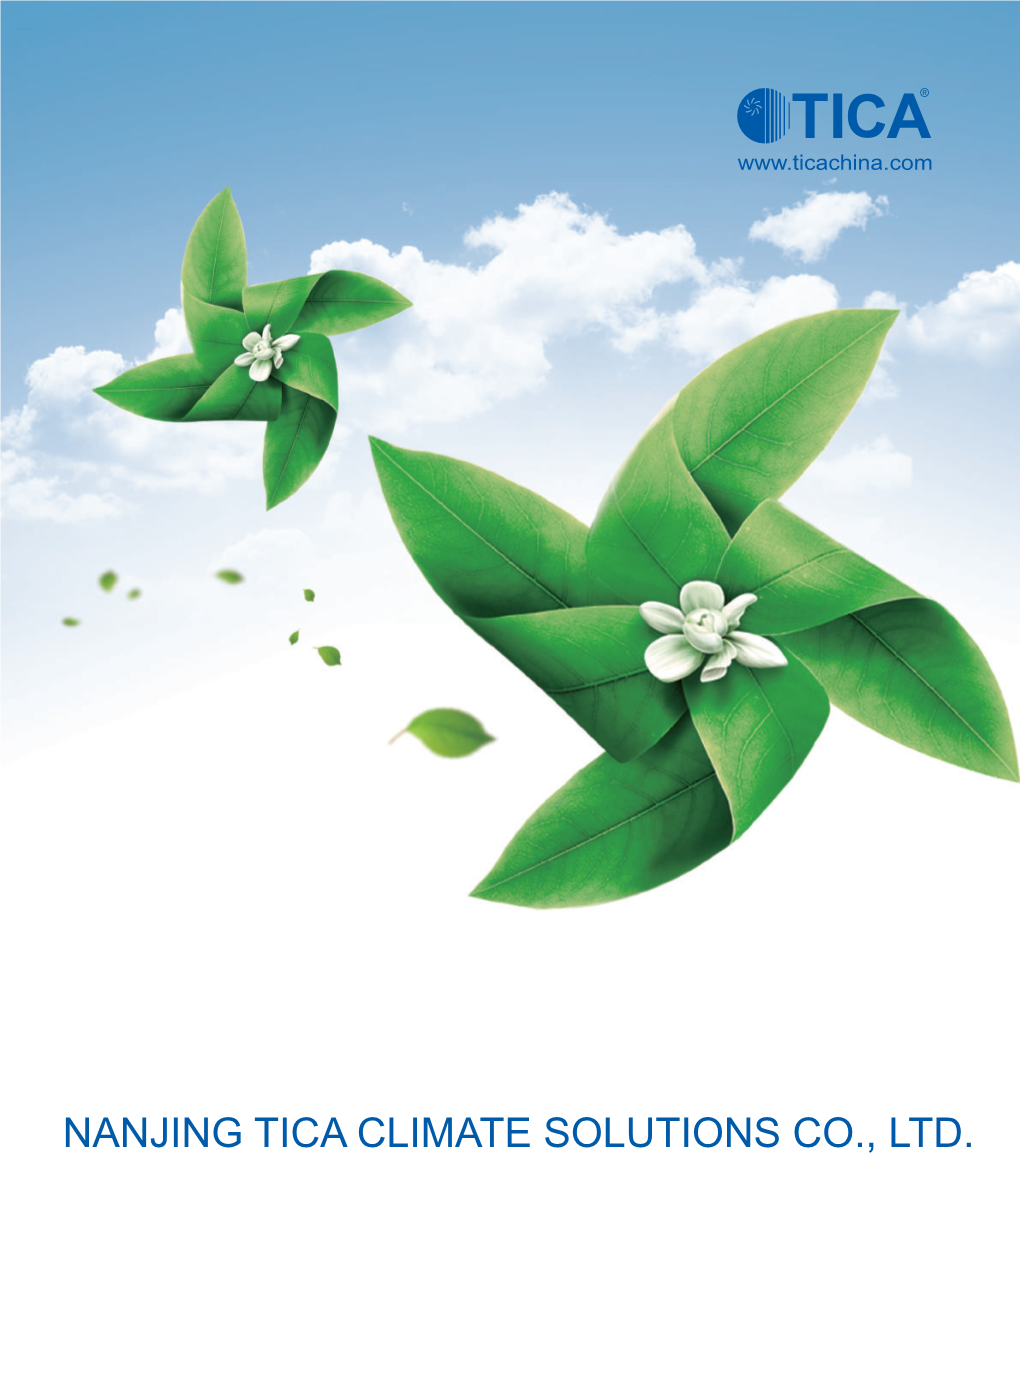 Nanjing Tica Climate Solutions Co., Ltd